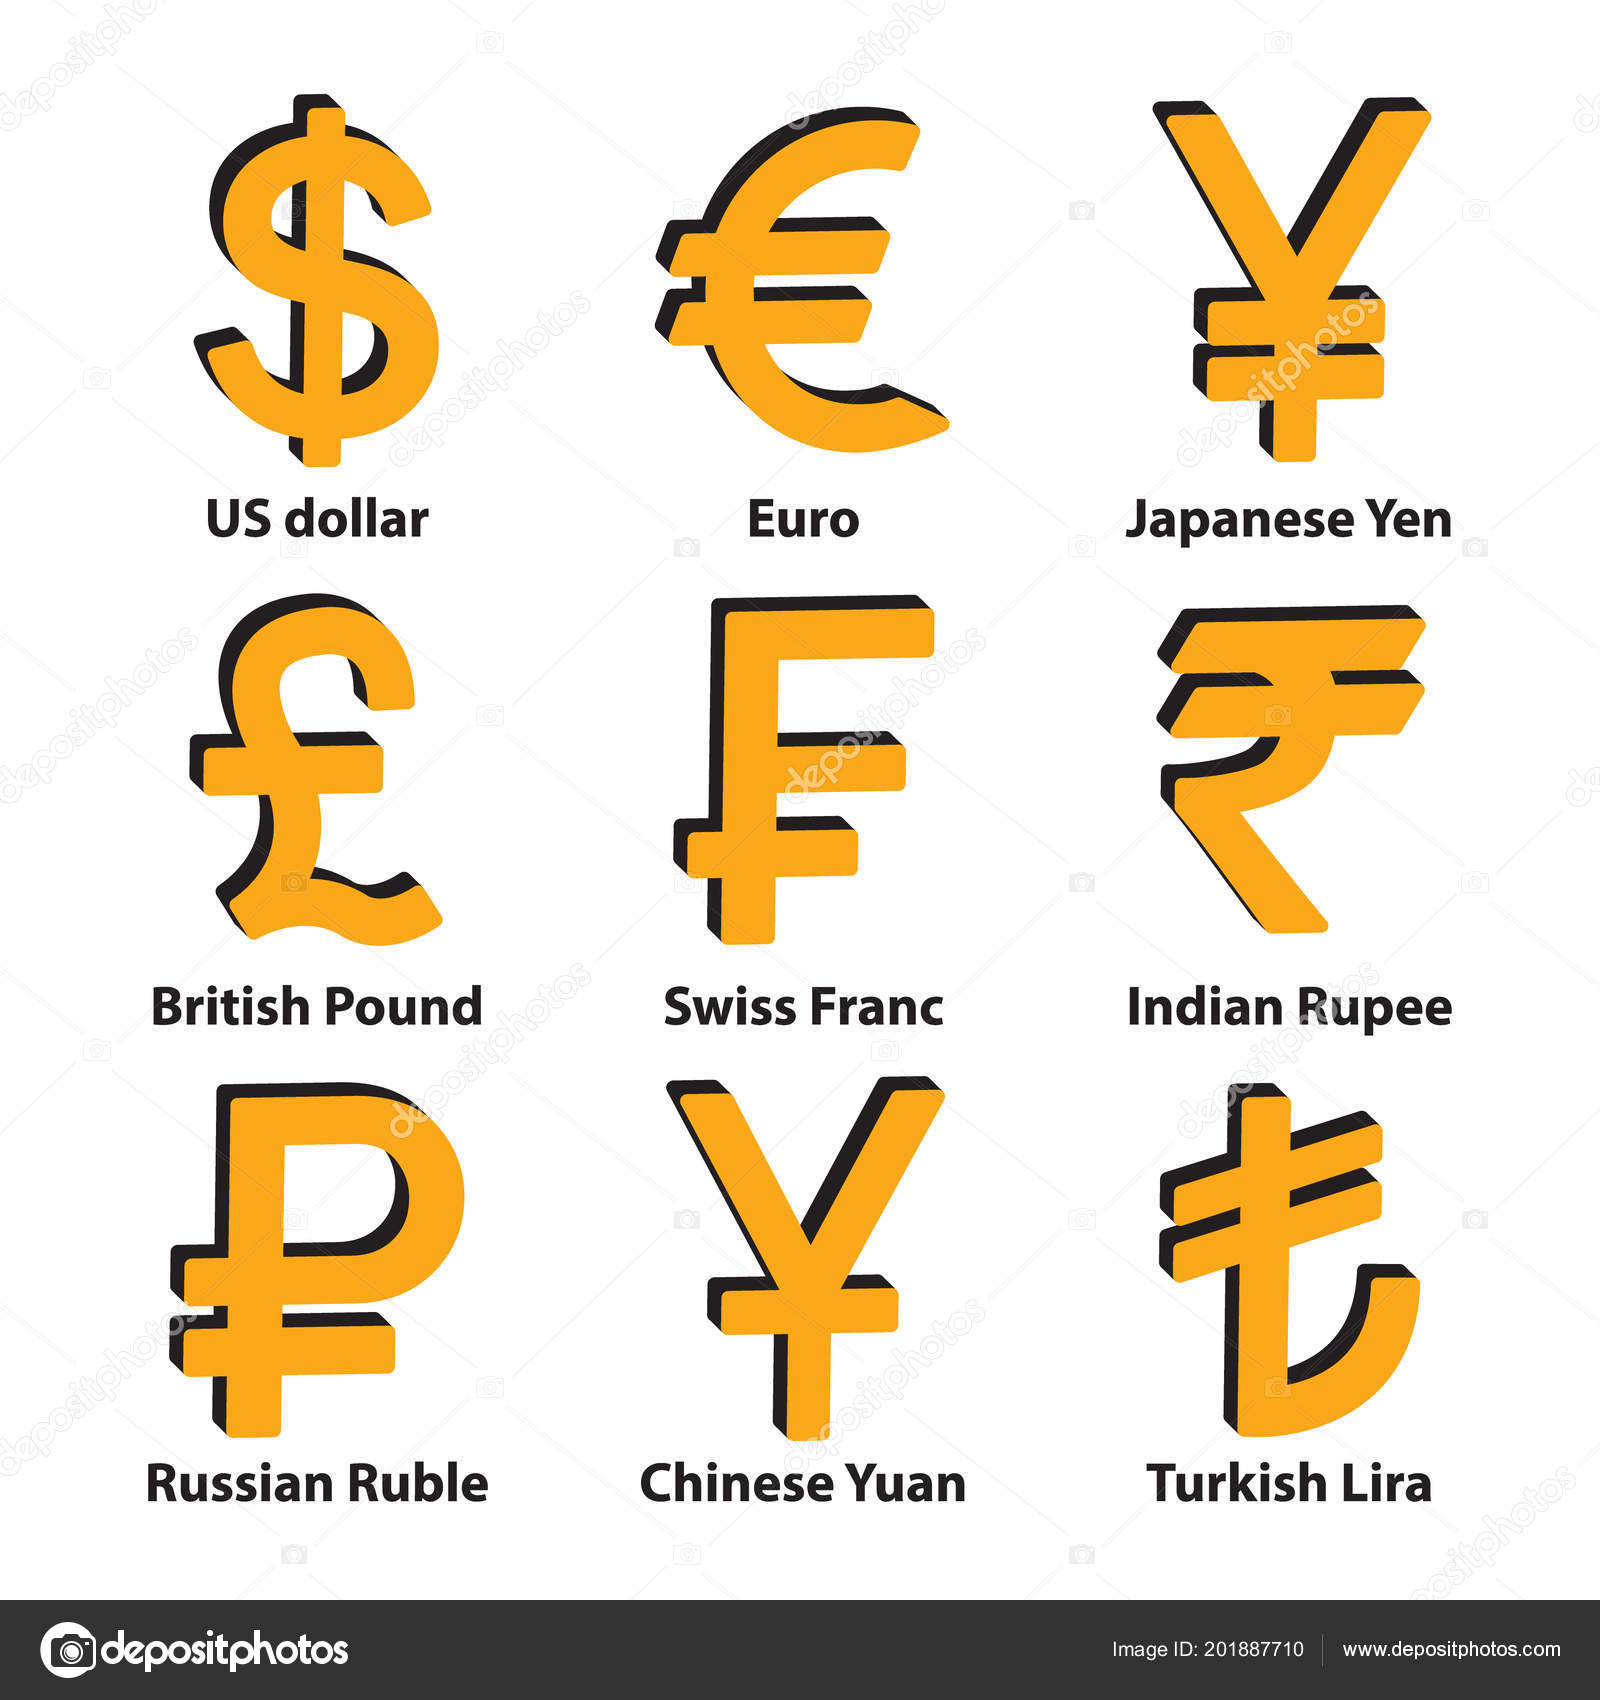 обозначение валют в стиме фото 24